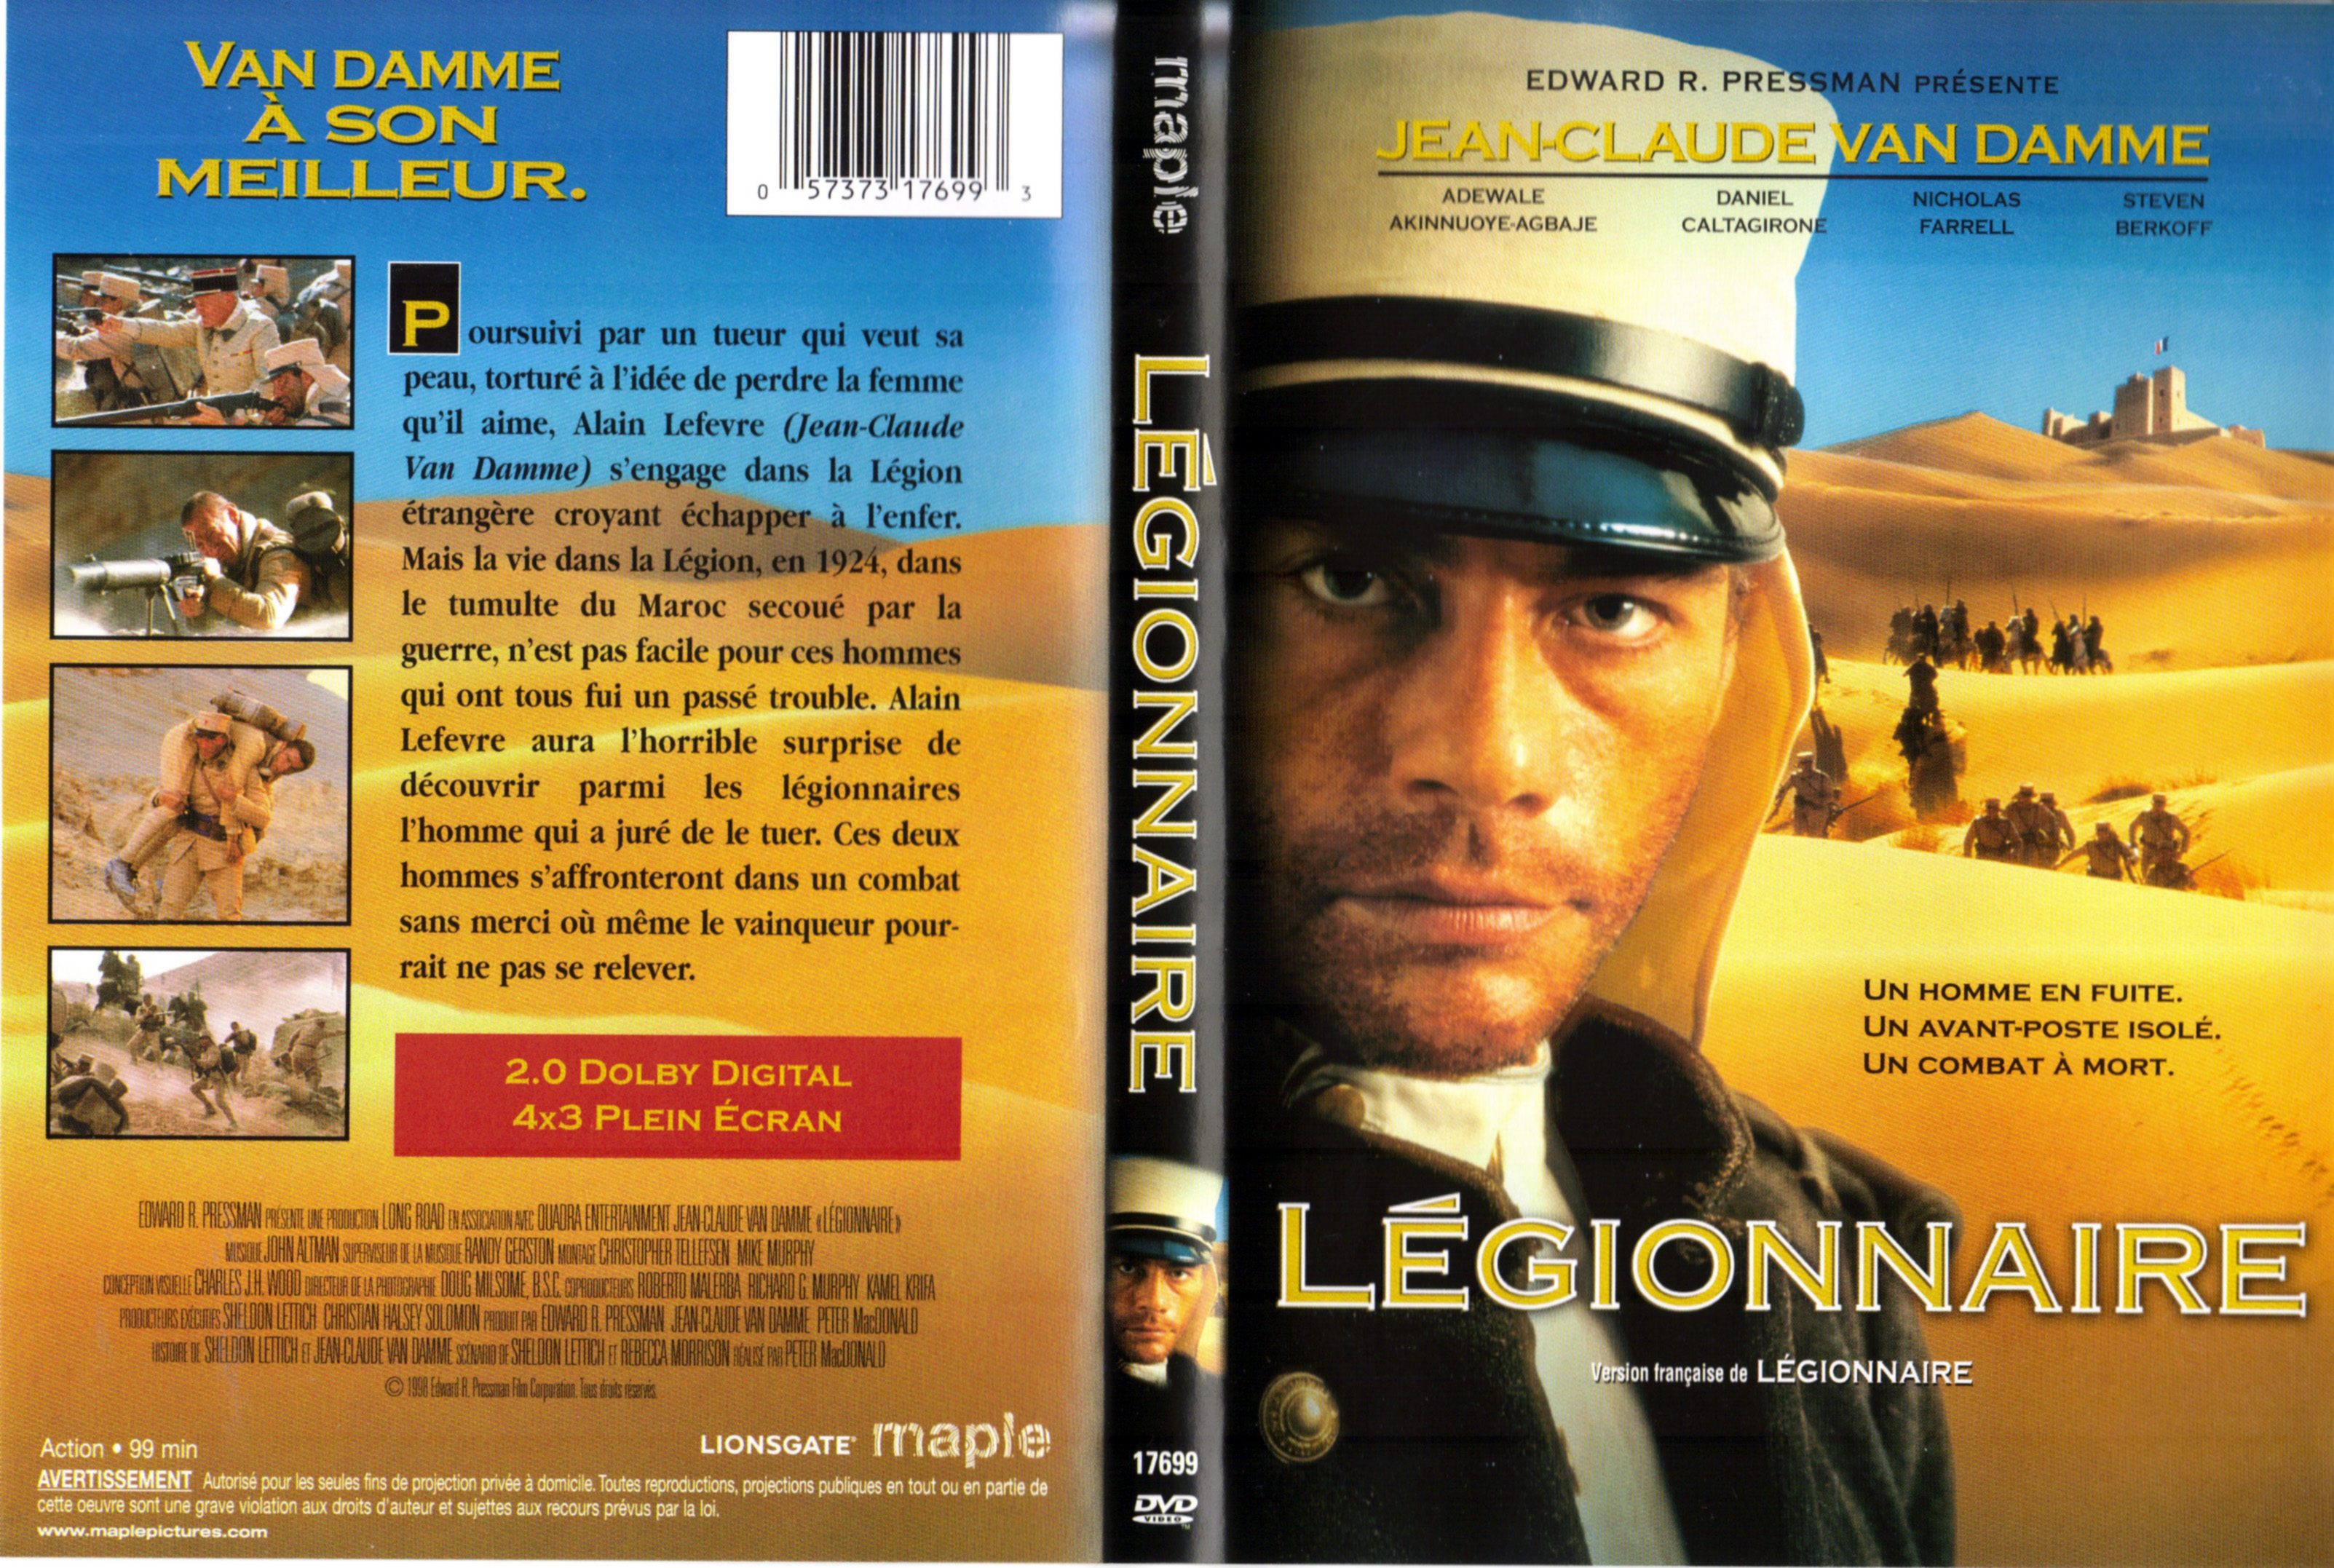 Jaquette DVD Legionnaire v2